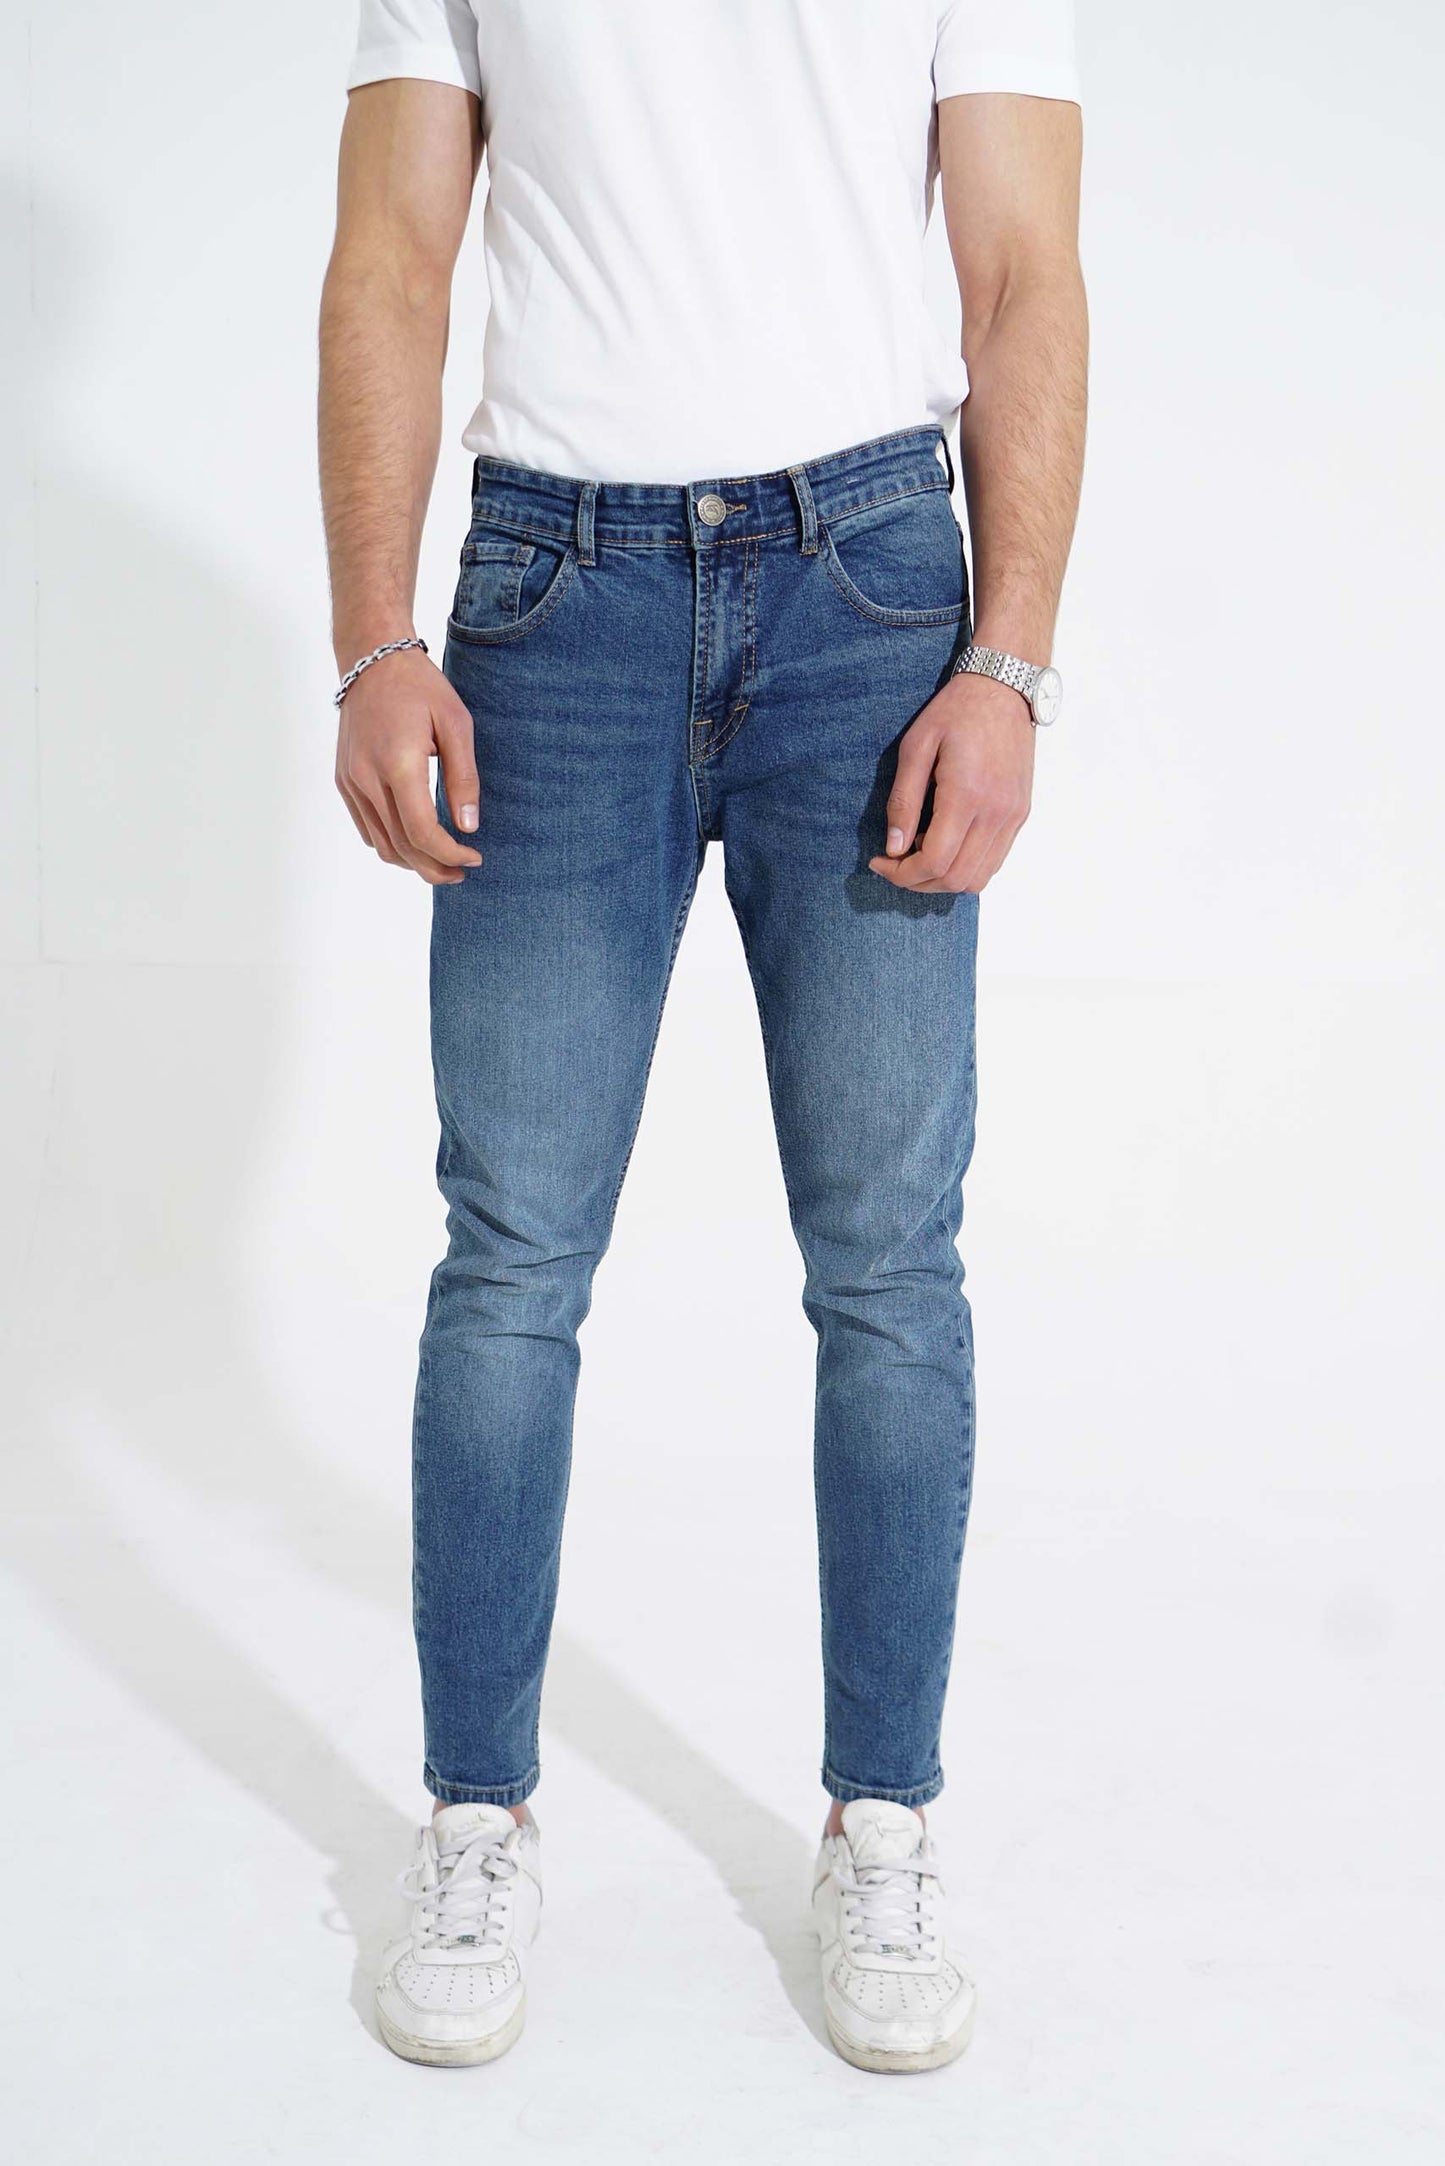 Blue Jeans - Skinny Fit (JN054)